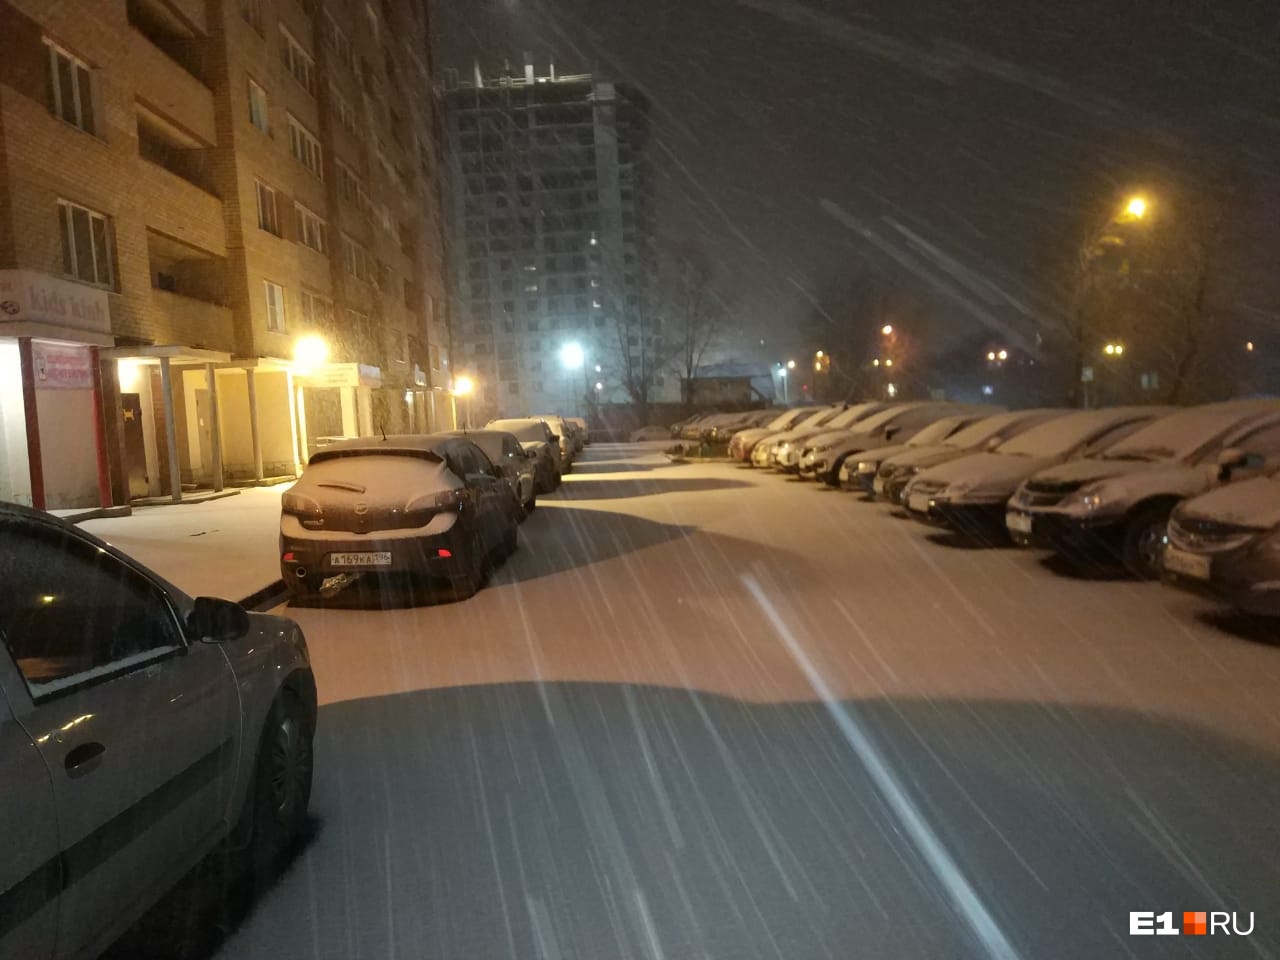 Екатеринбург накрыла зима: онлайн-репортаж с заснеженных улиц города